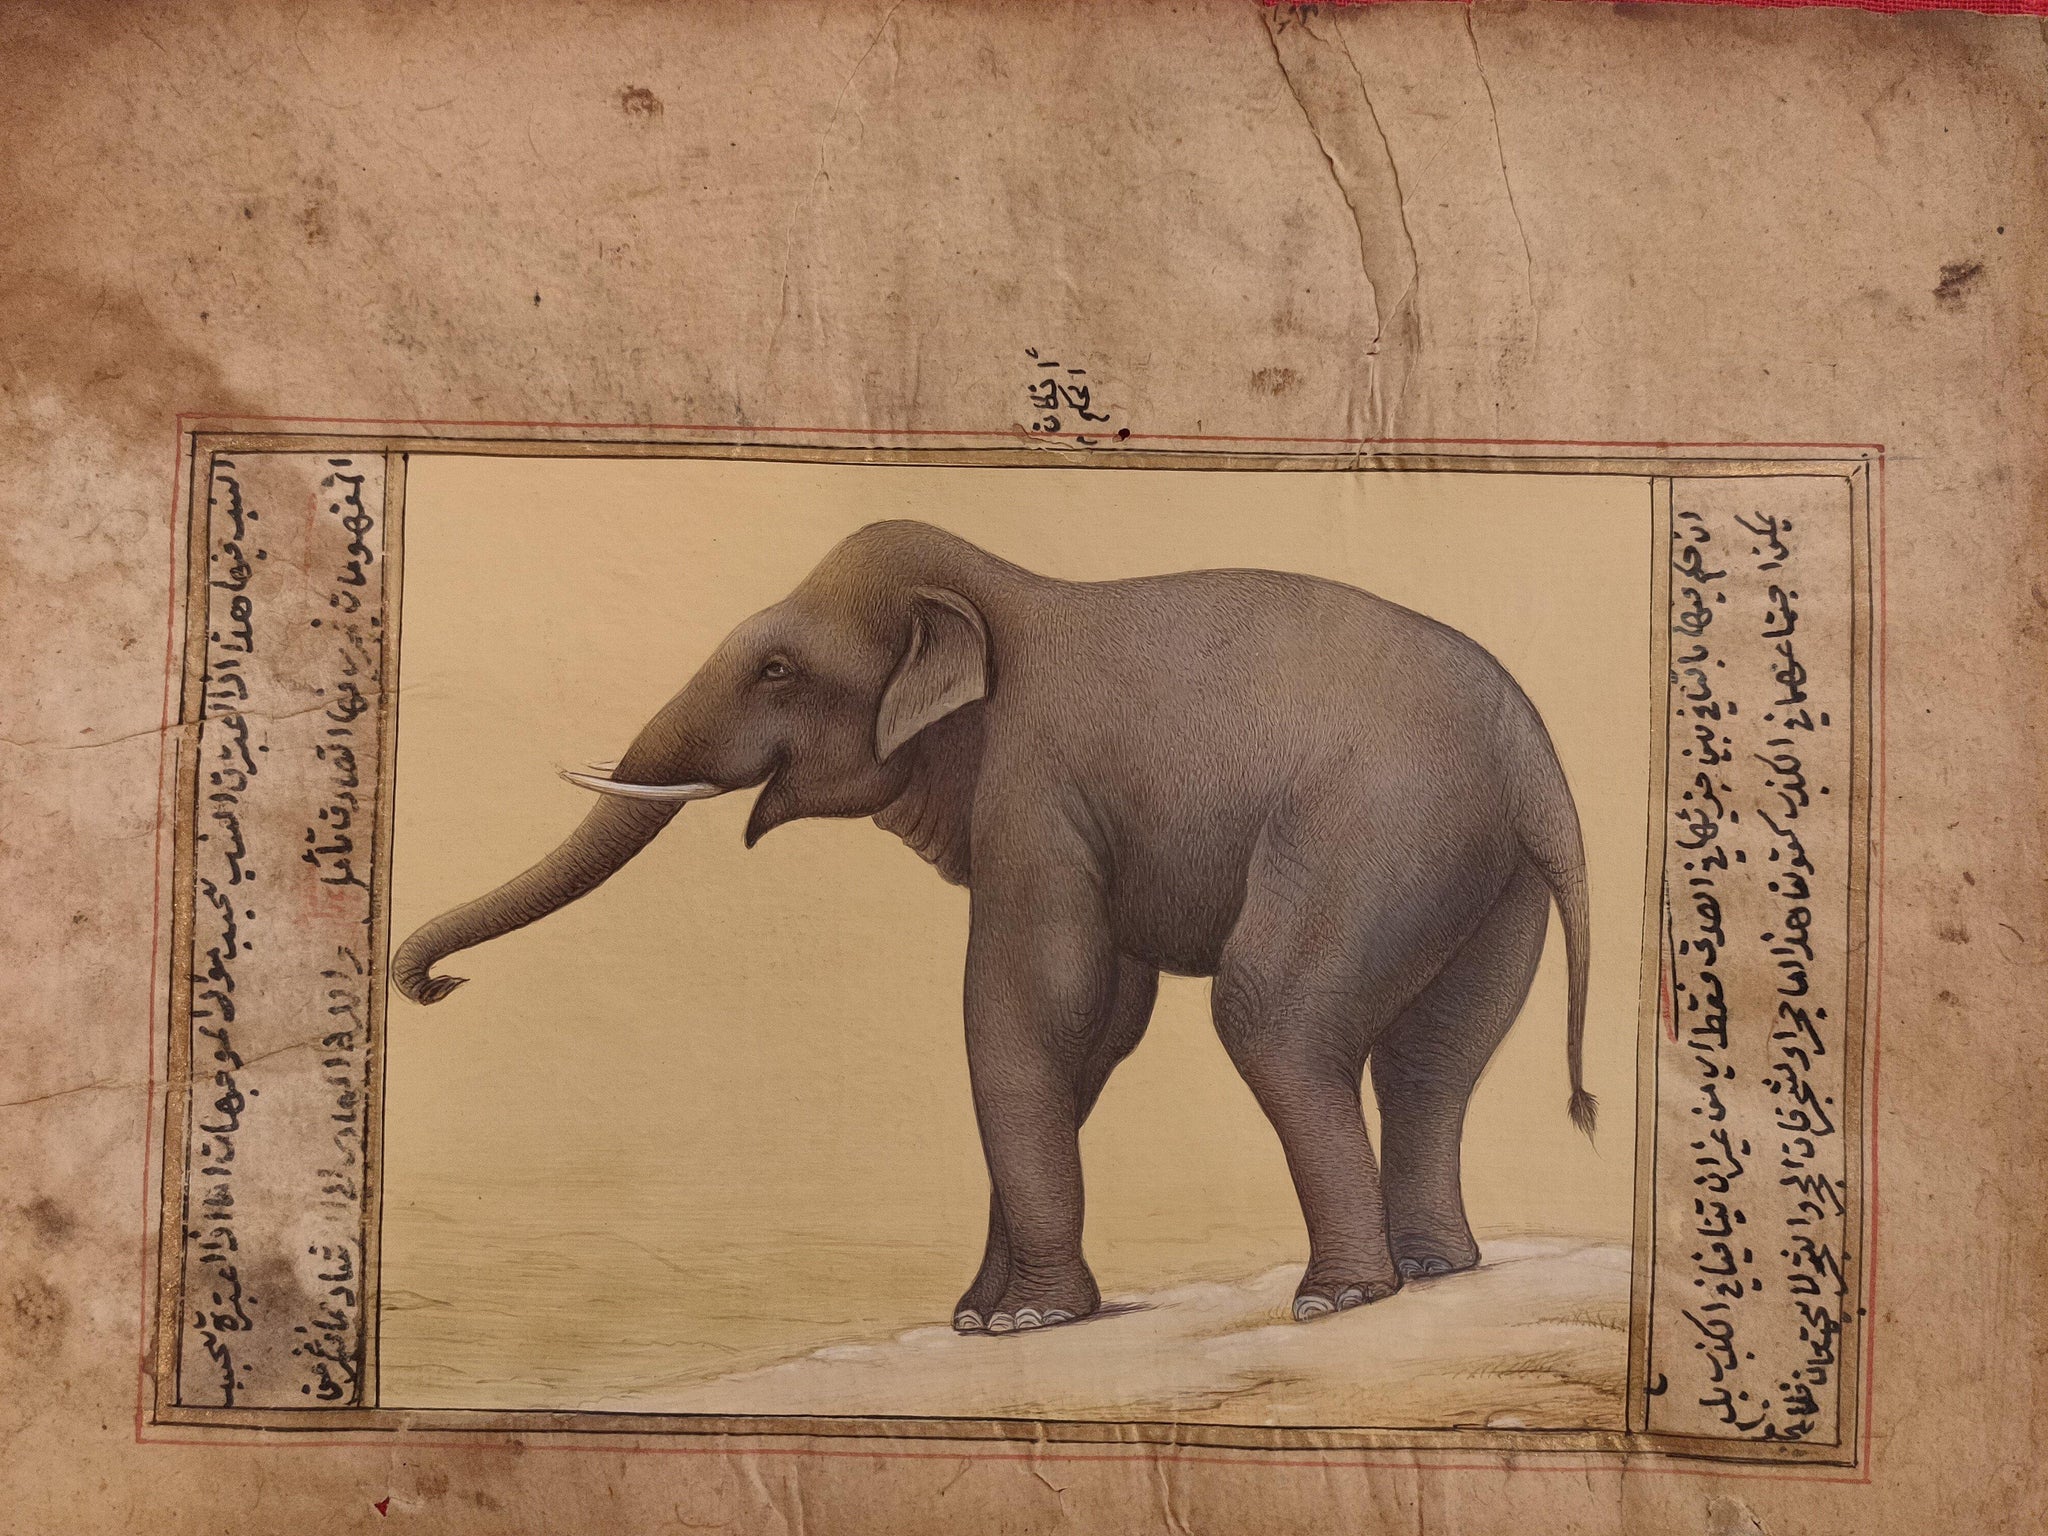 14936 Elephant Paper Art Images Stock Photos  Vectors  Shutterstock